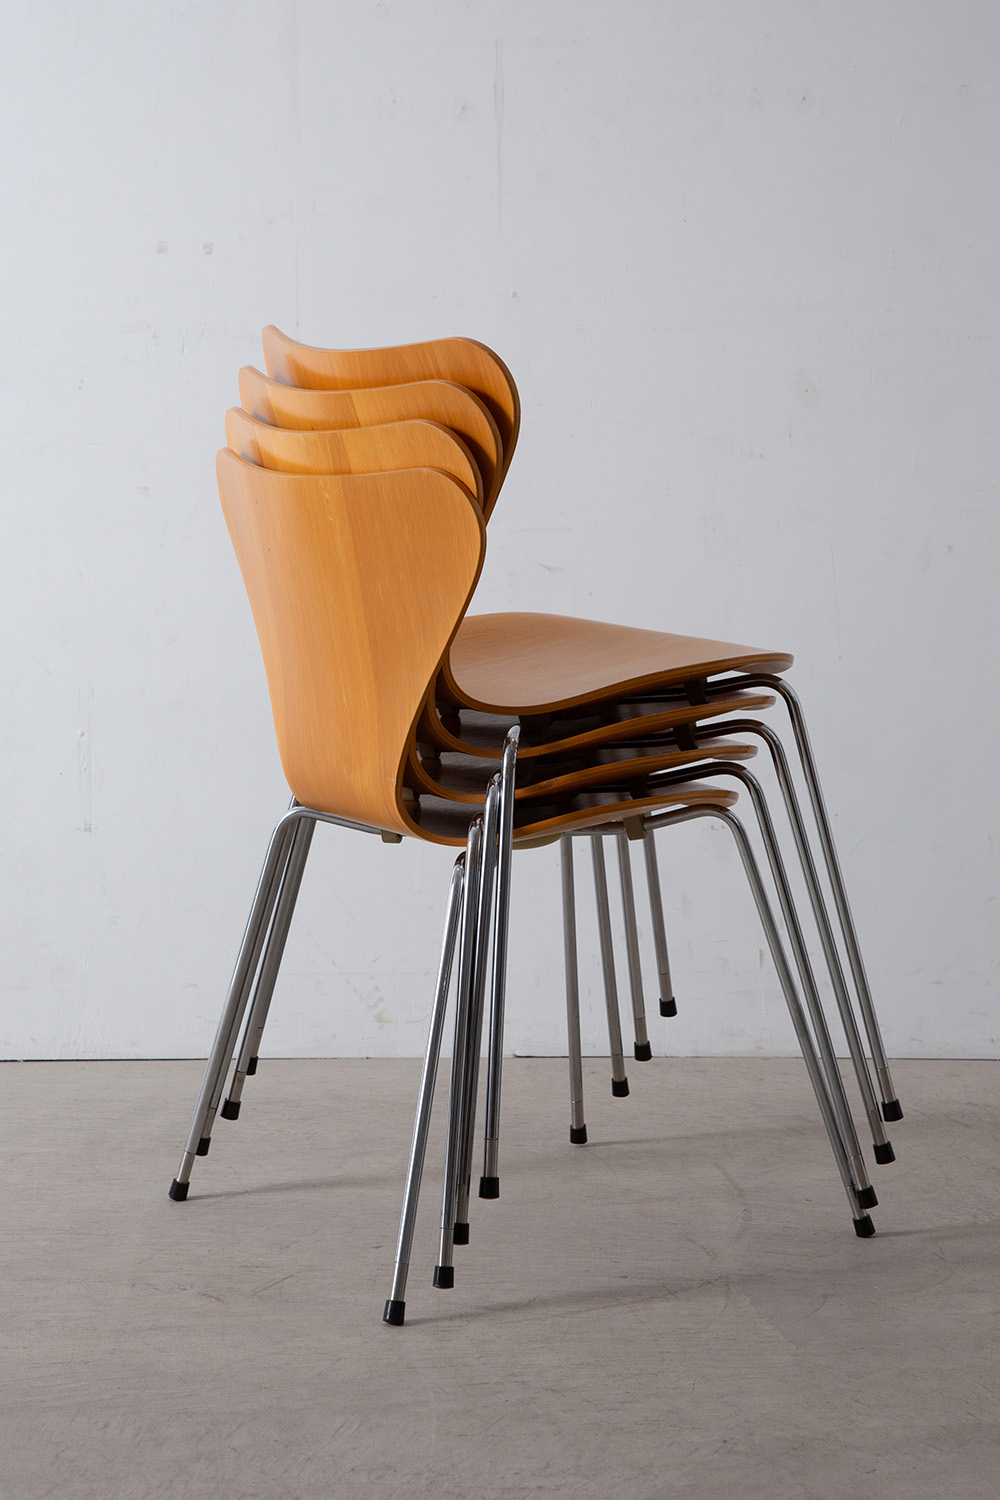 stoop | 'SERIES 7' Chair by Arne Jacobsen for Fritz Hansen